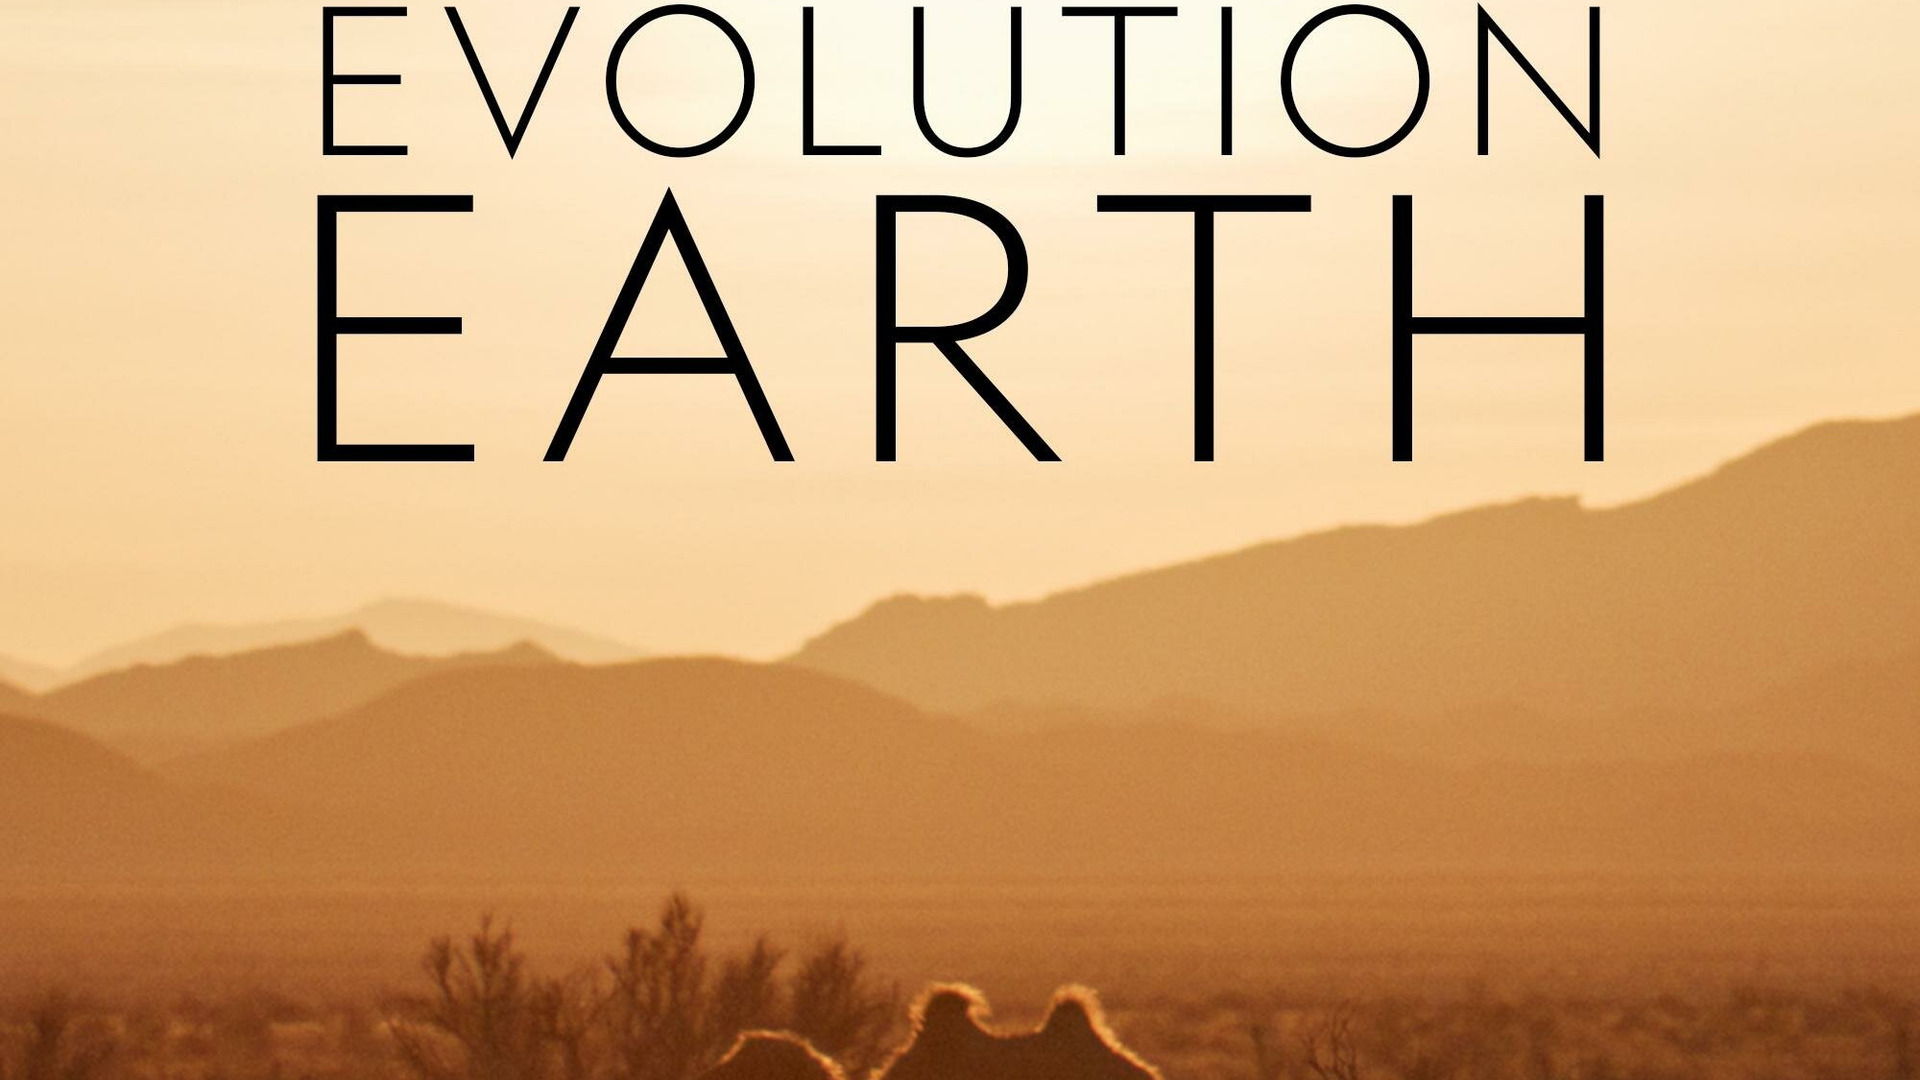 Show Evolution Earth